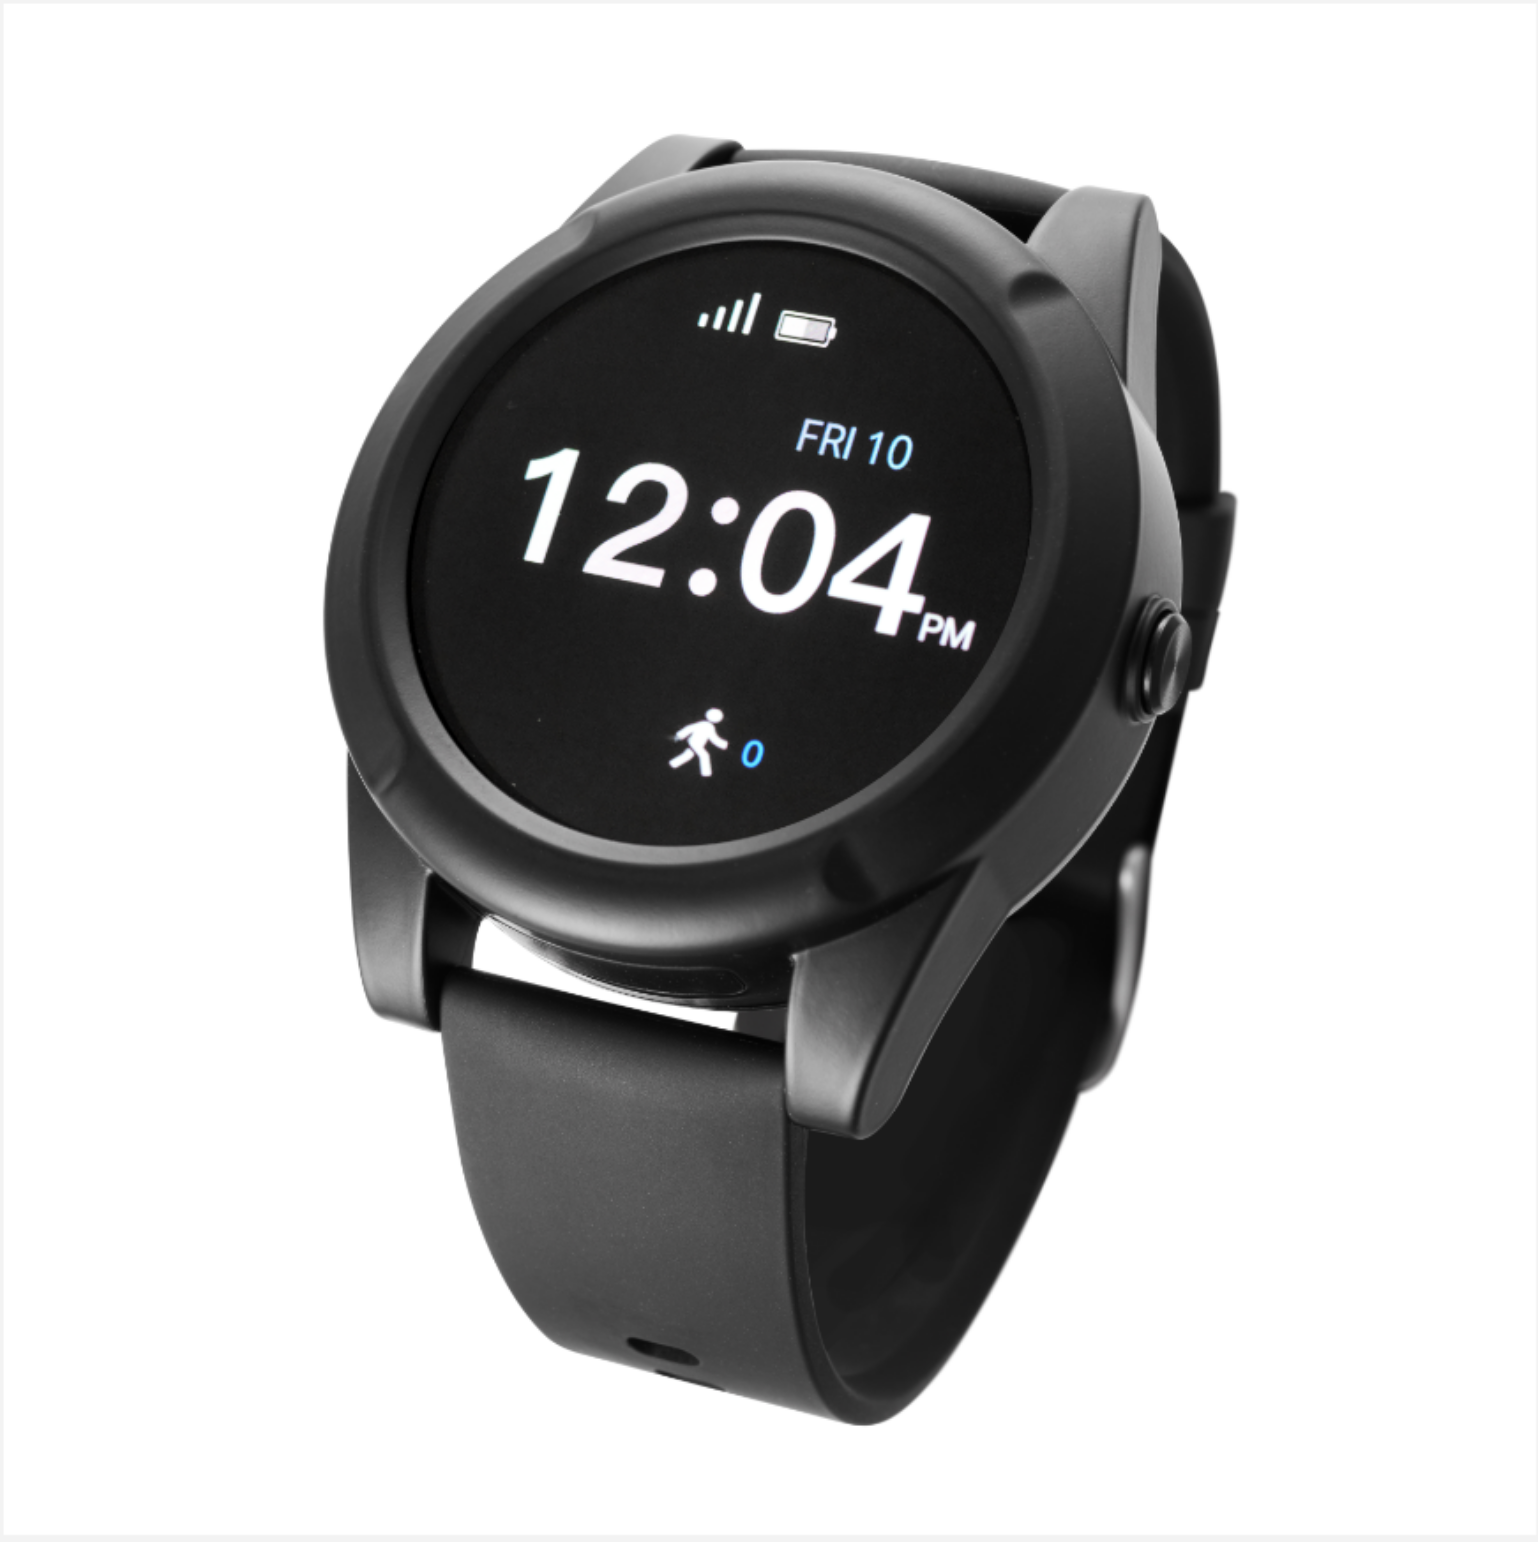 Lifestation's Smartwatch Medical Alert Watch